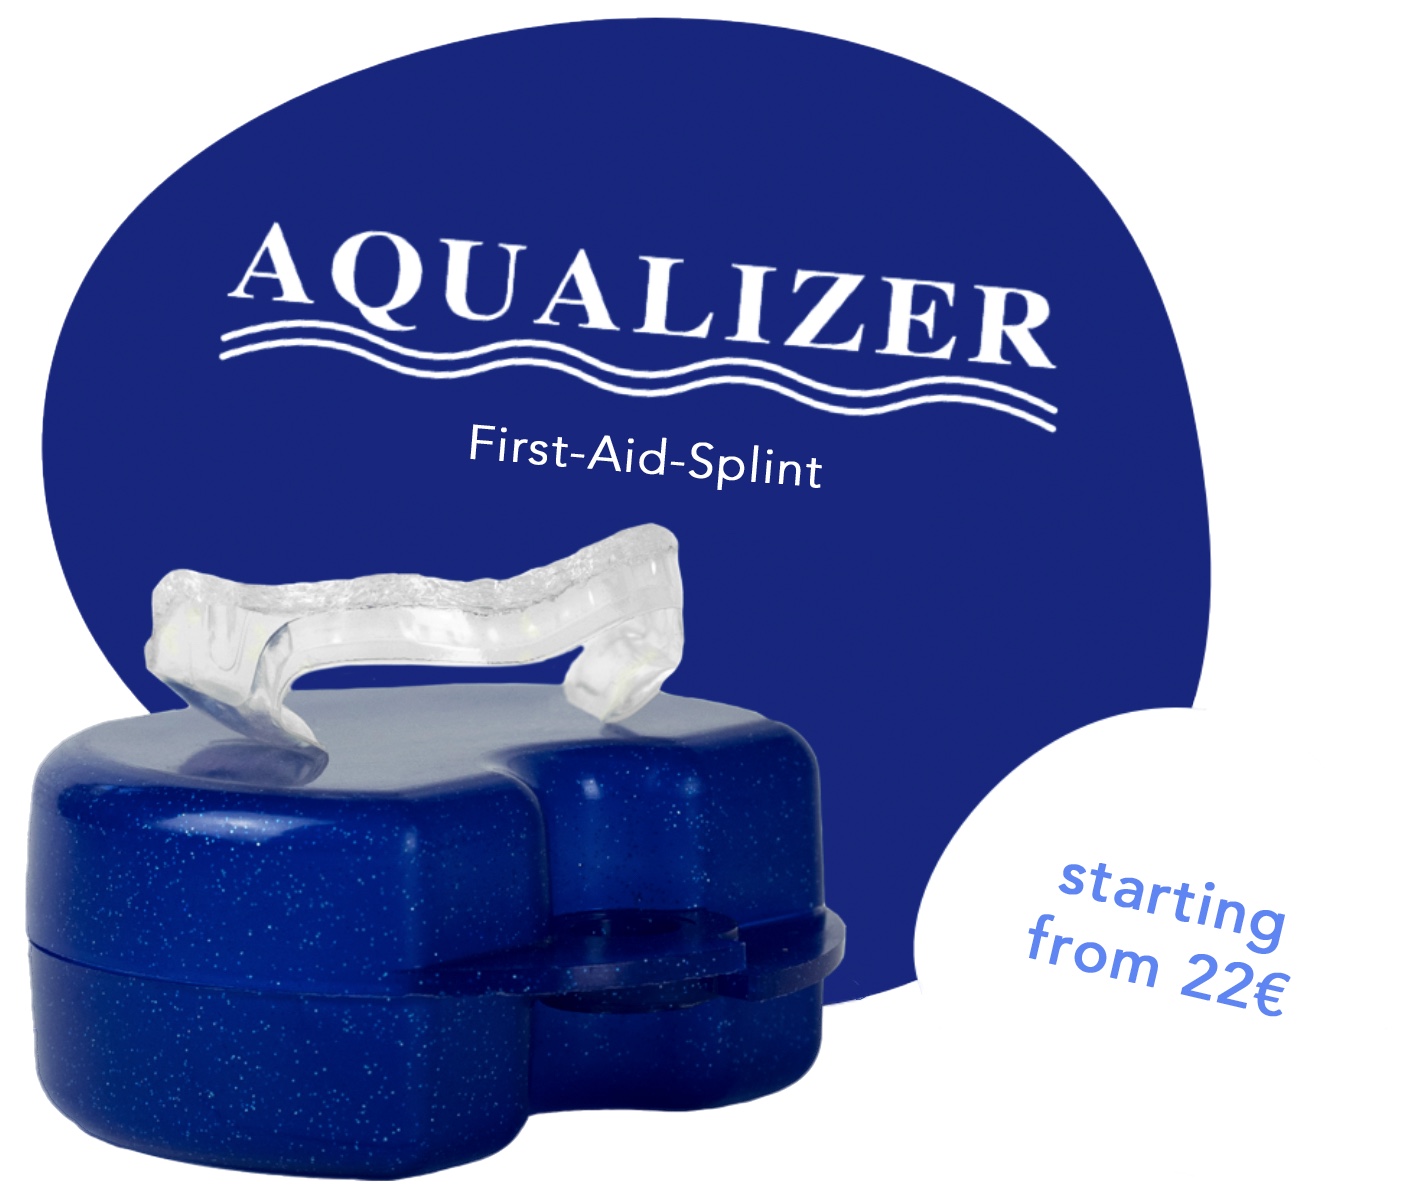 Aqualizer bite splint in transparent with a blue glittery storage box